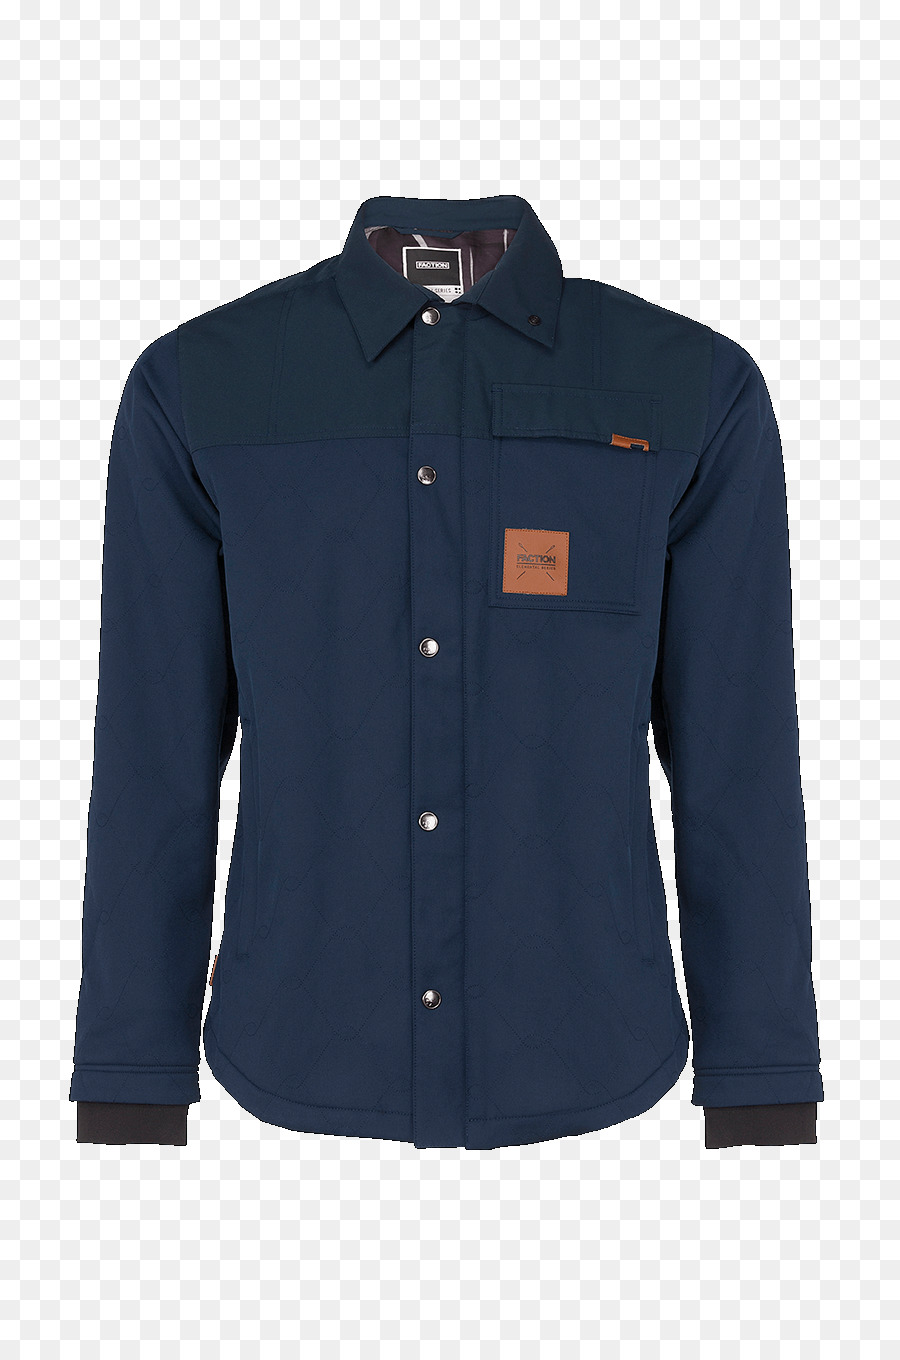 Kleidung Factory outlet shop Shirt Jacke Hose - men ' s wear